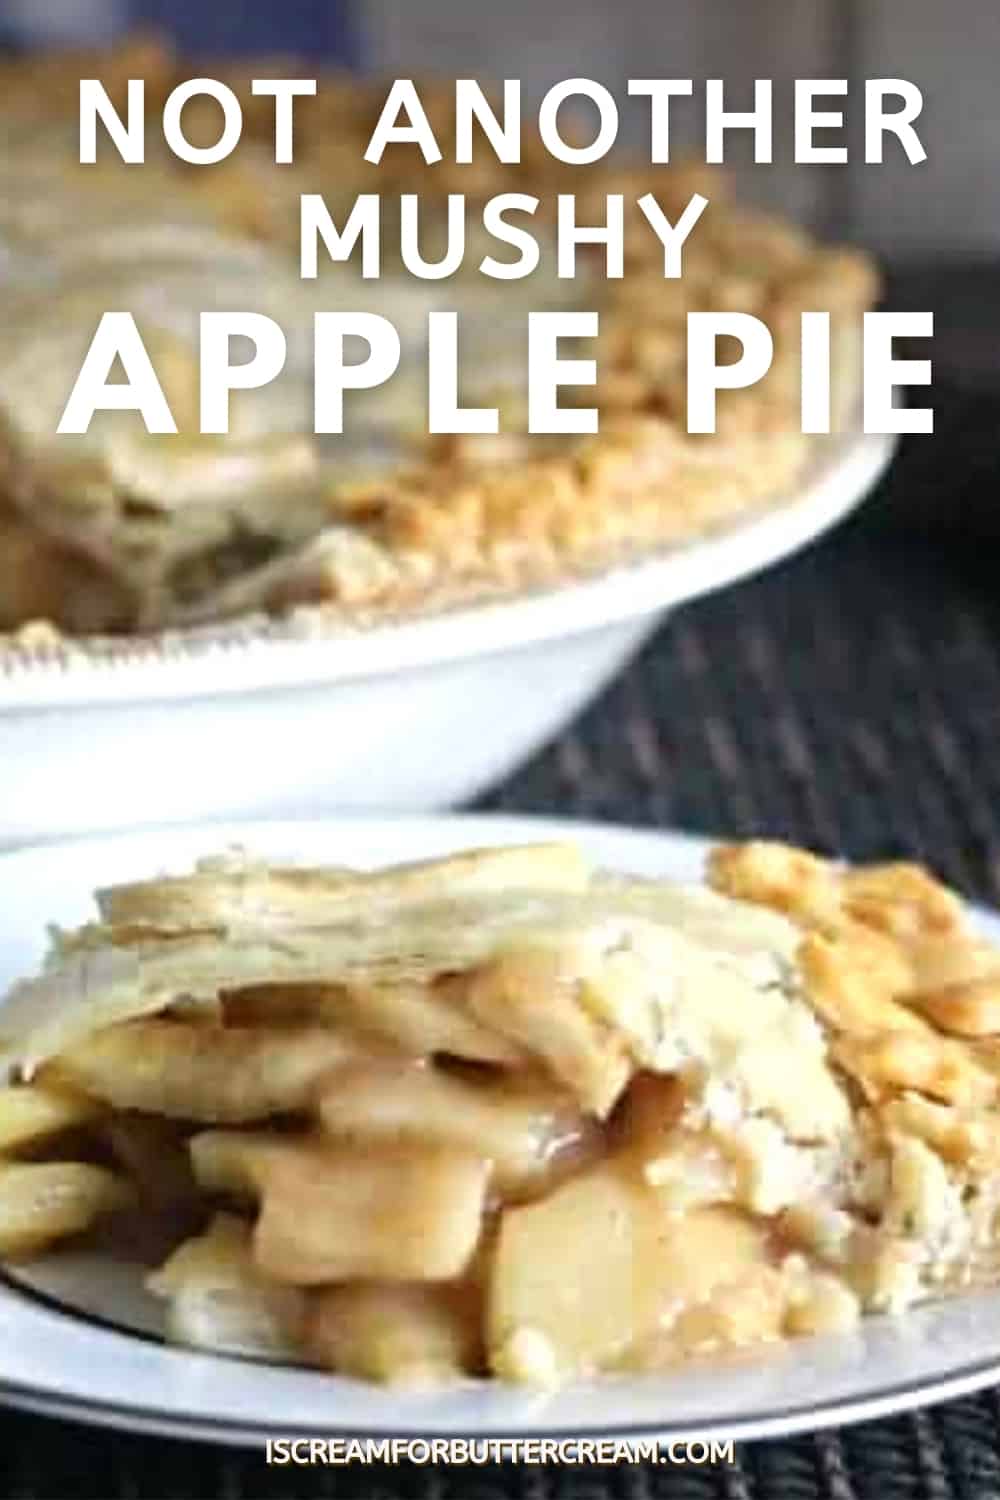 apple pie recipe pin graphic